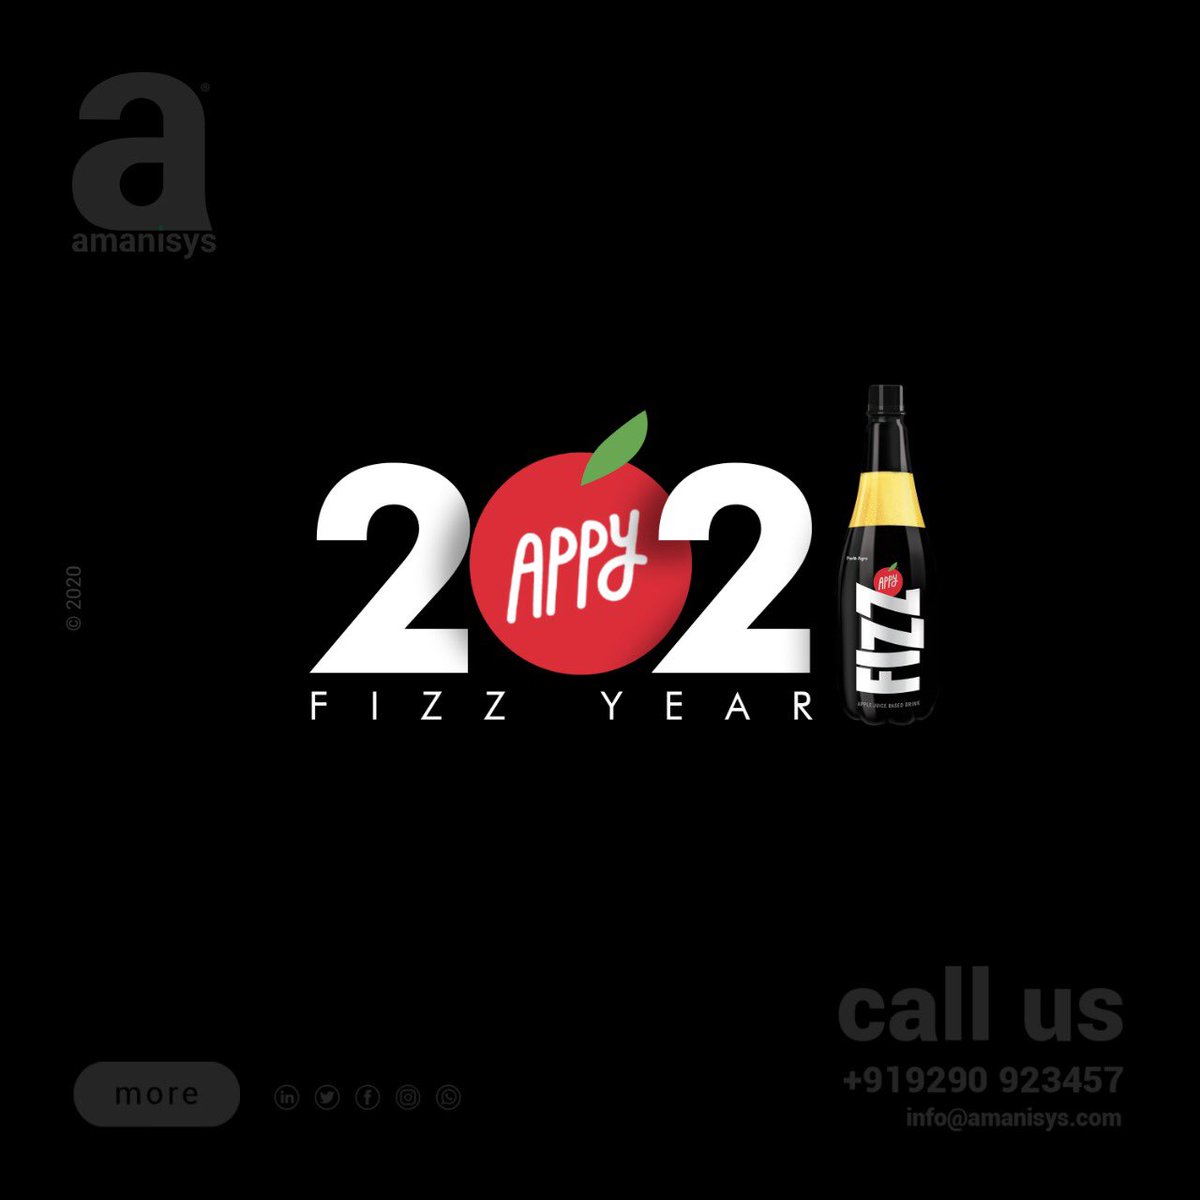 hAppy Fizz Year - 2021 amanisys.com#design Social Media Marketing, Graphic Design, Illustration, Packaging Design, Logo Design, Video Production, Presentation Design, Brand Design & Print Design